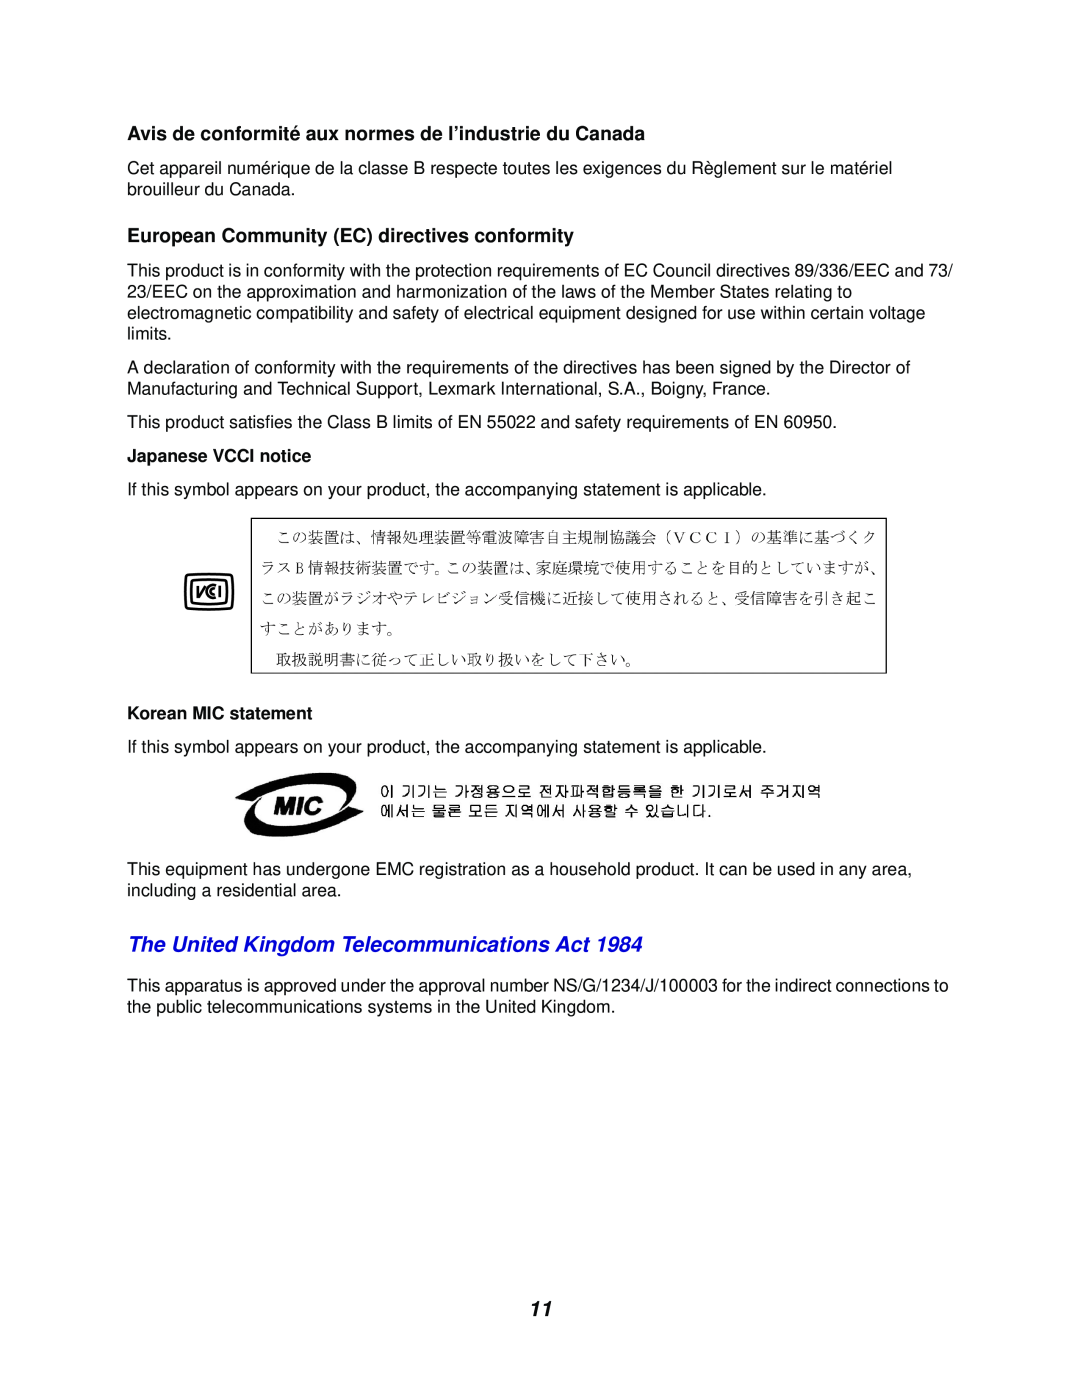 Lexmark 762 manual The United Kingdom Telecommunications Act, Japanese VCCI notice, Korean MIC statement 